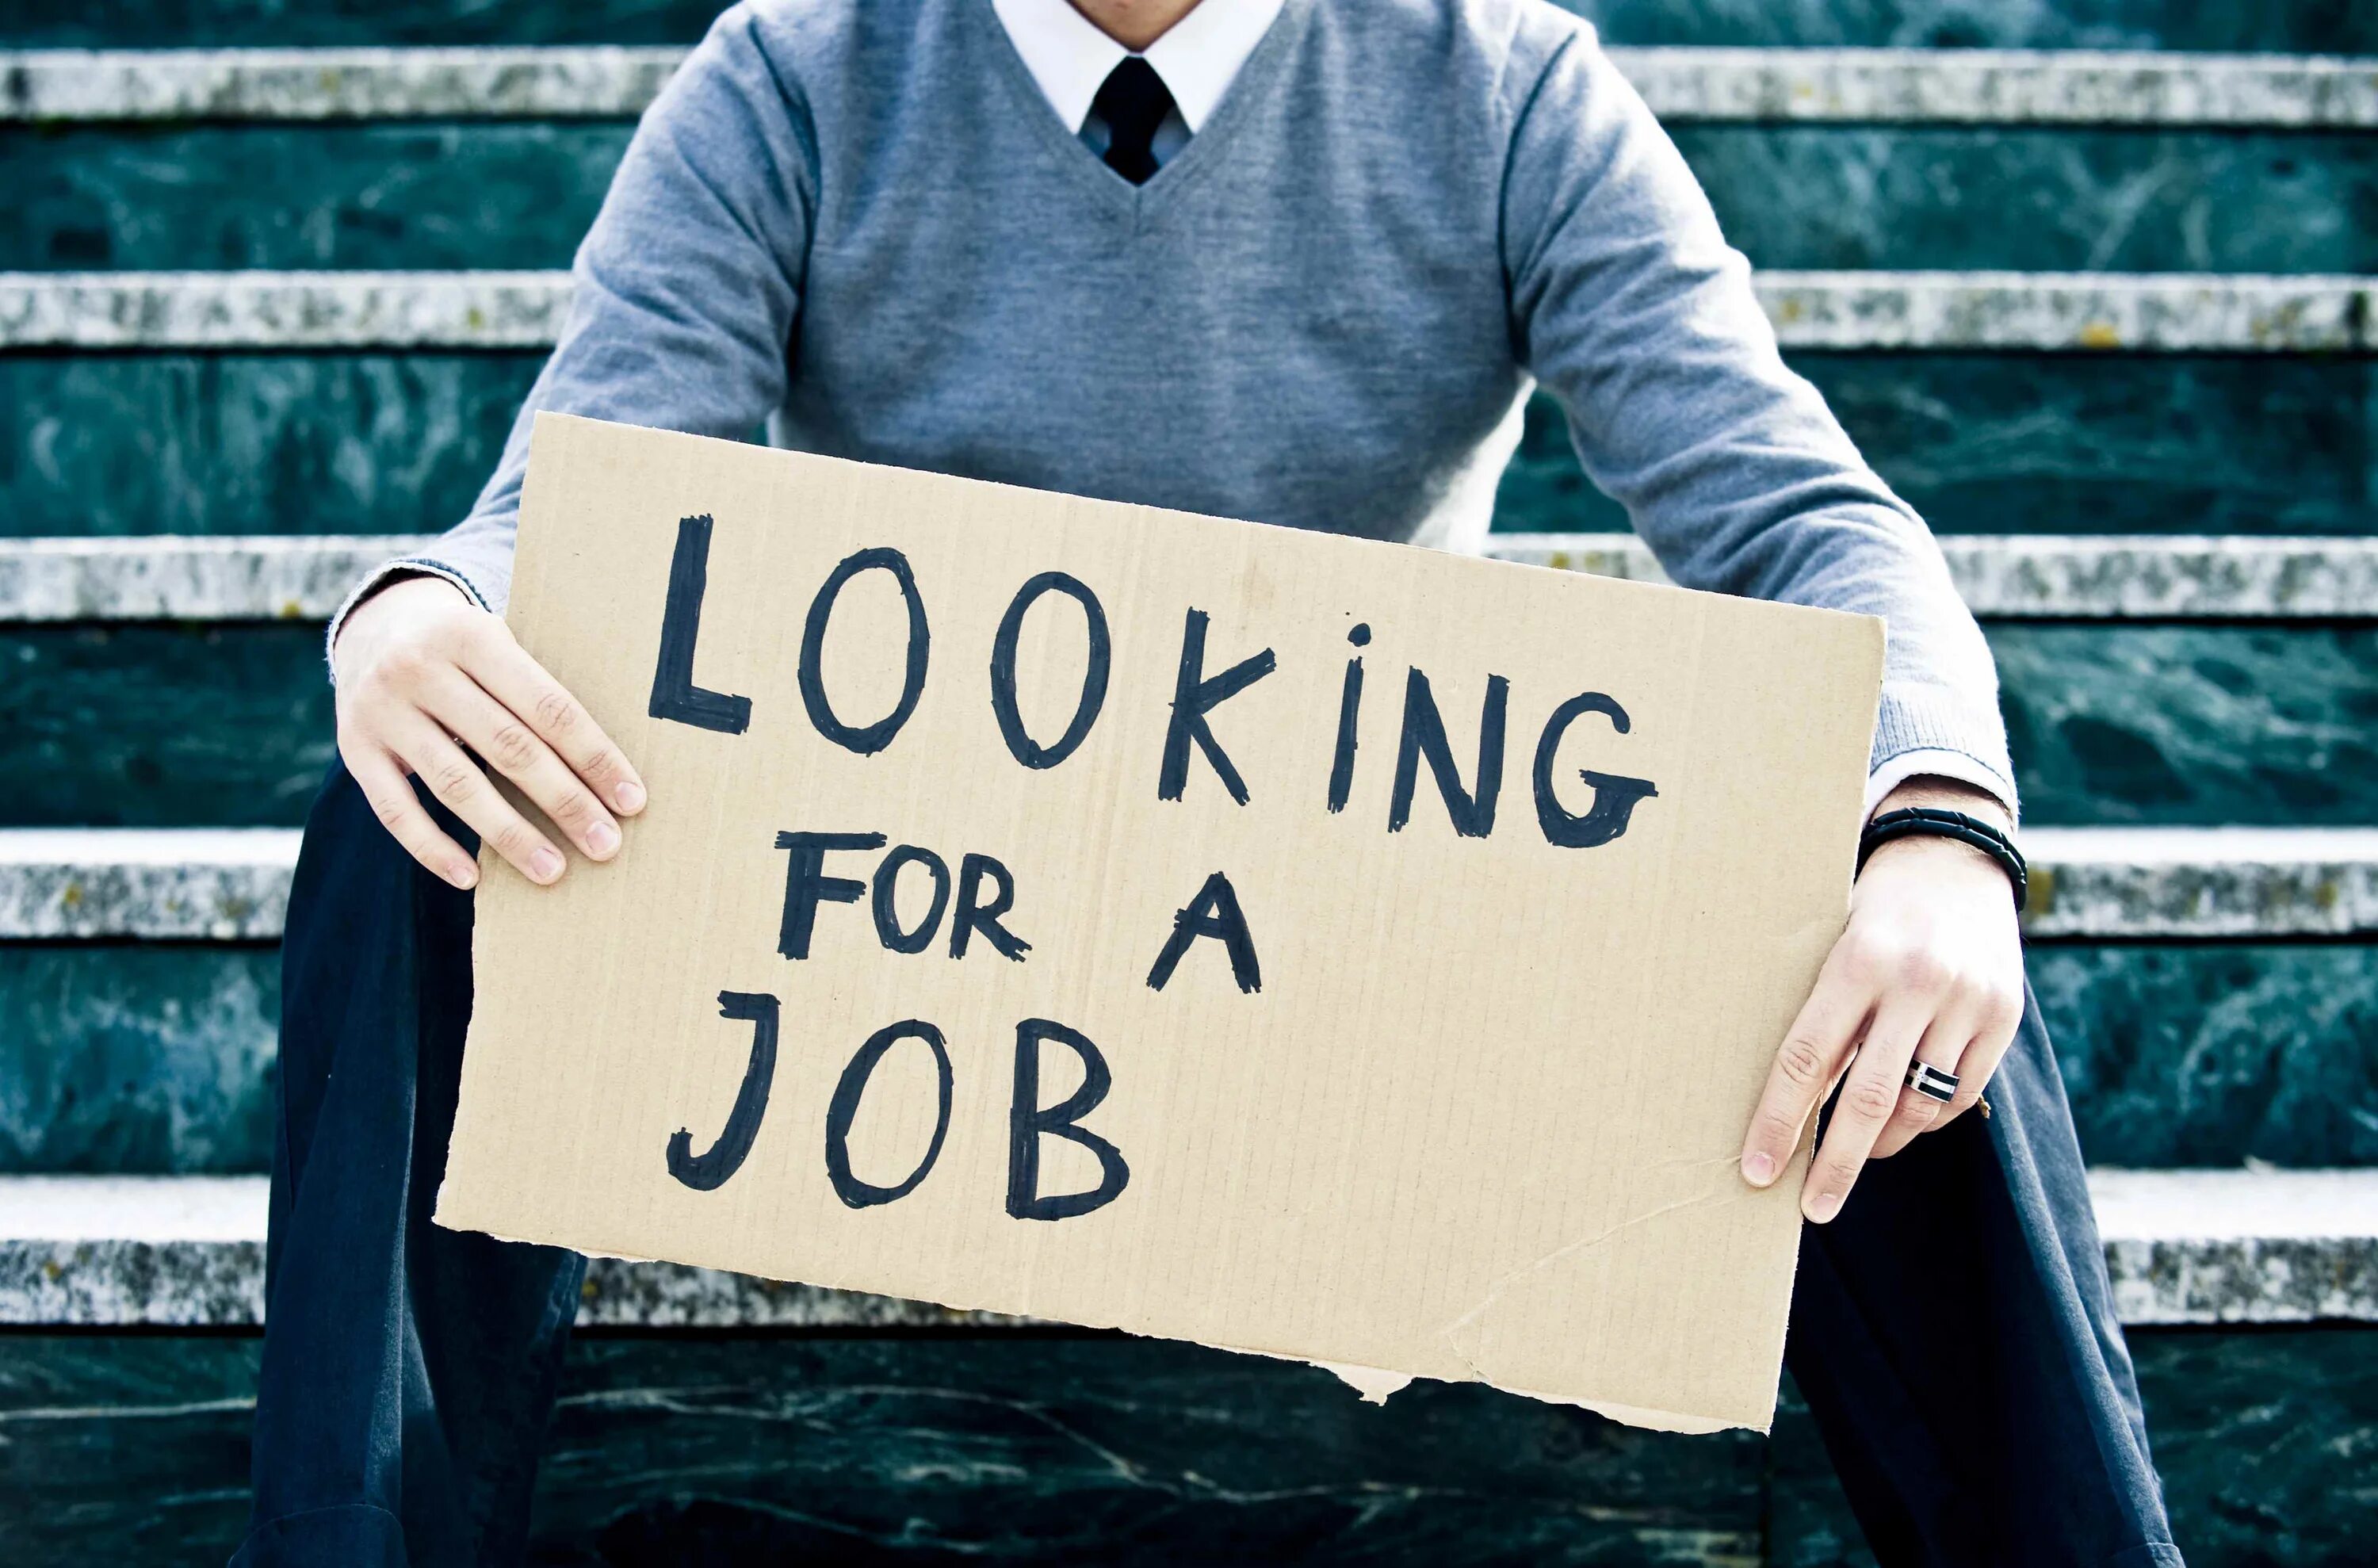 Ищу работу. Безработица ищу работу. Поиск работы картинки. Ищу работу картинки.